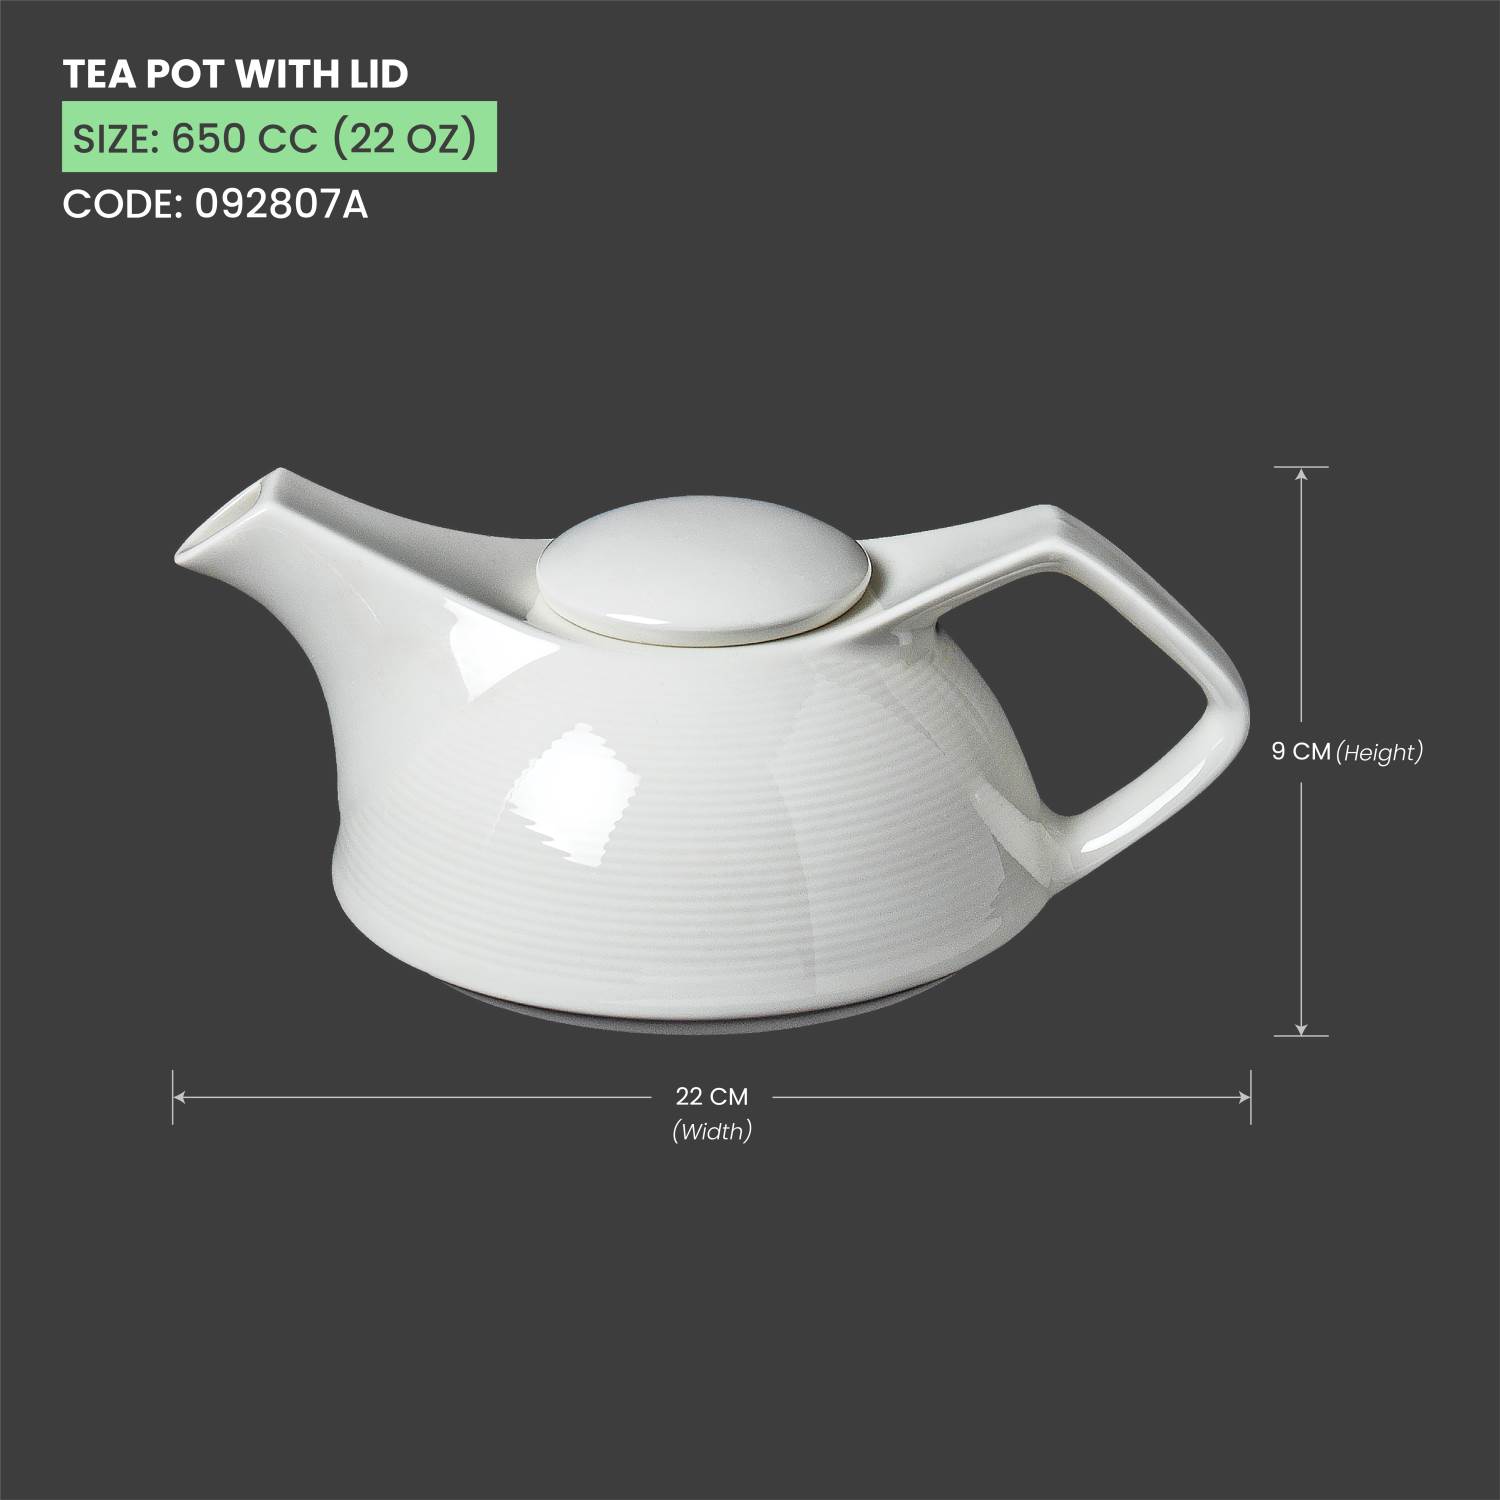 Baralee Wish Tea Pot With Lid